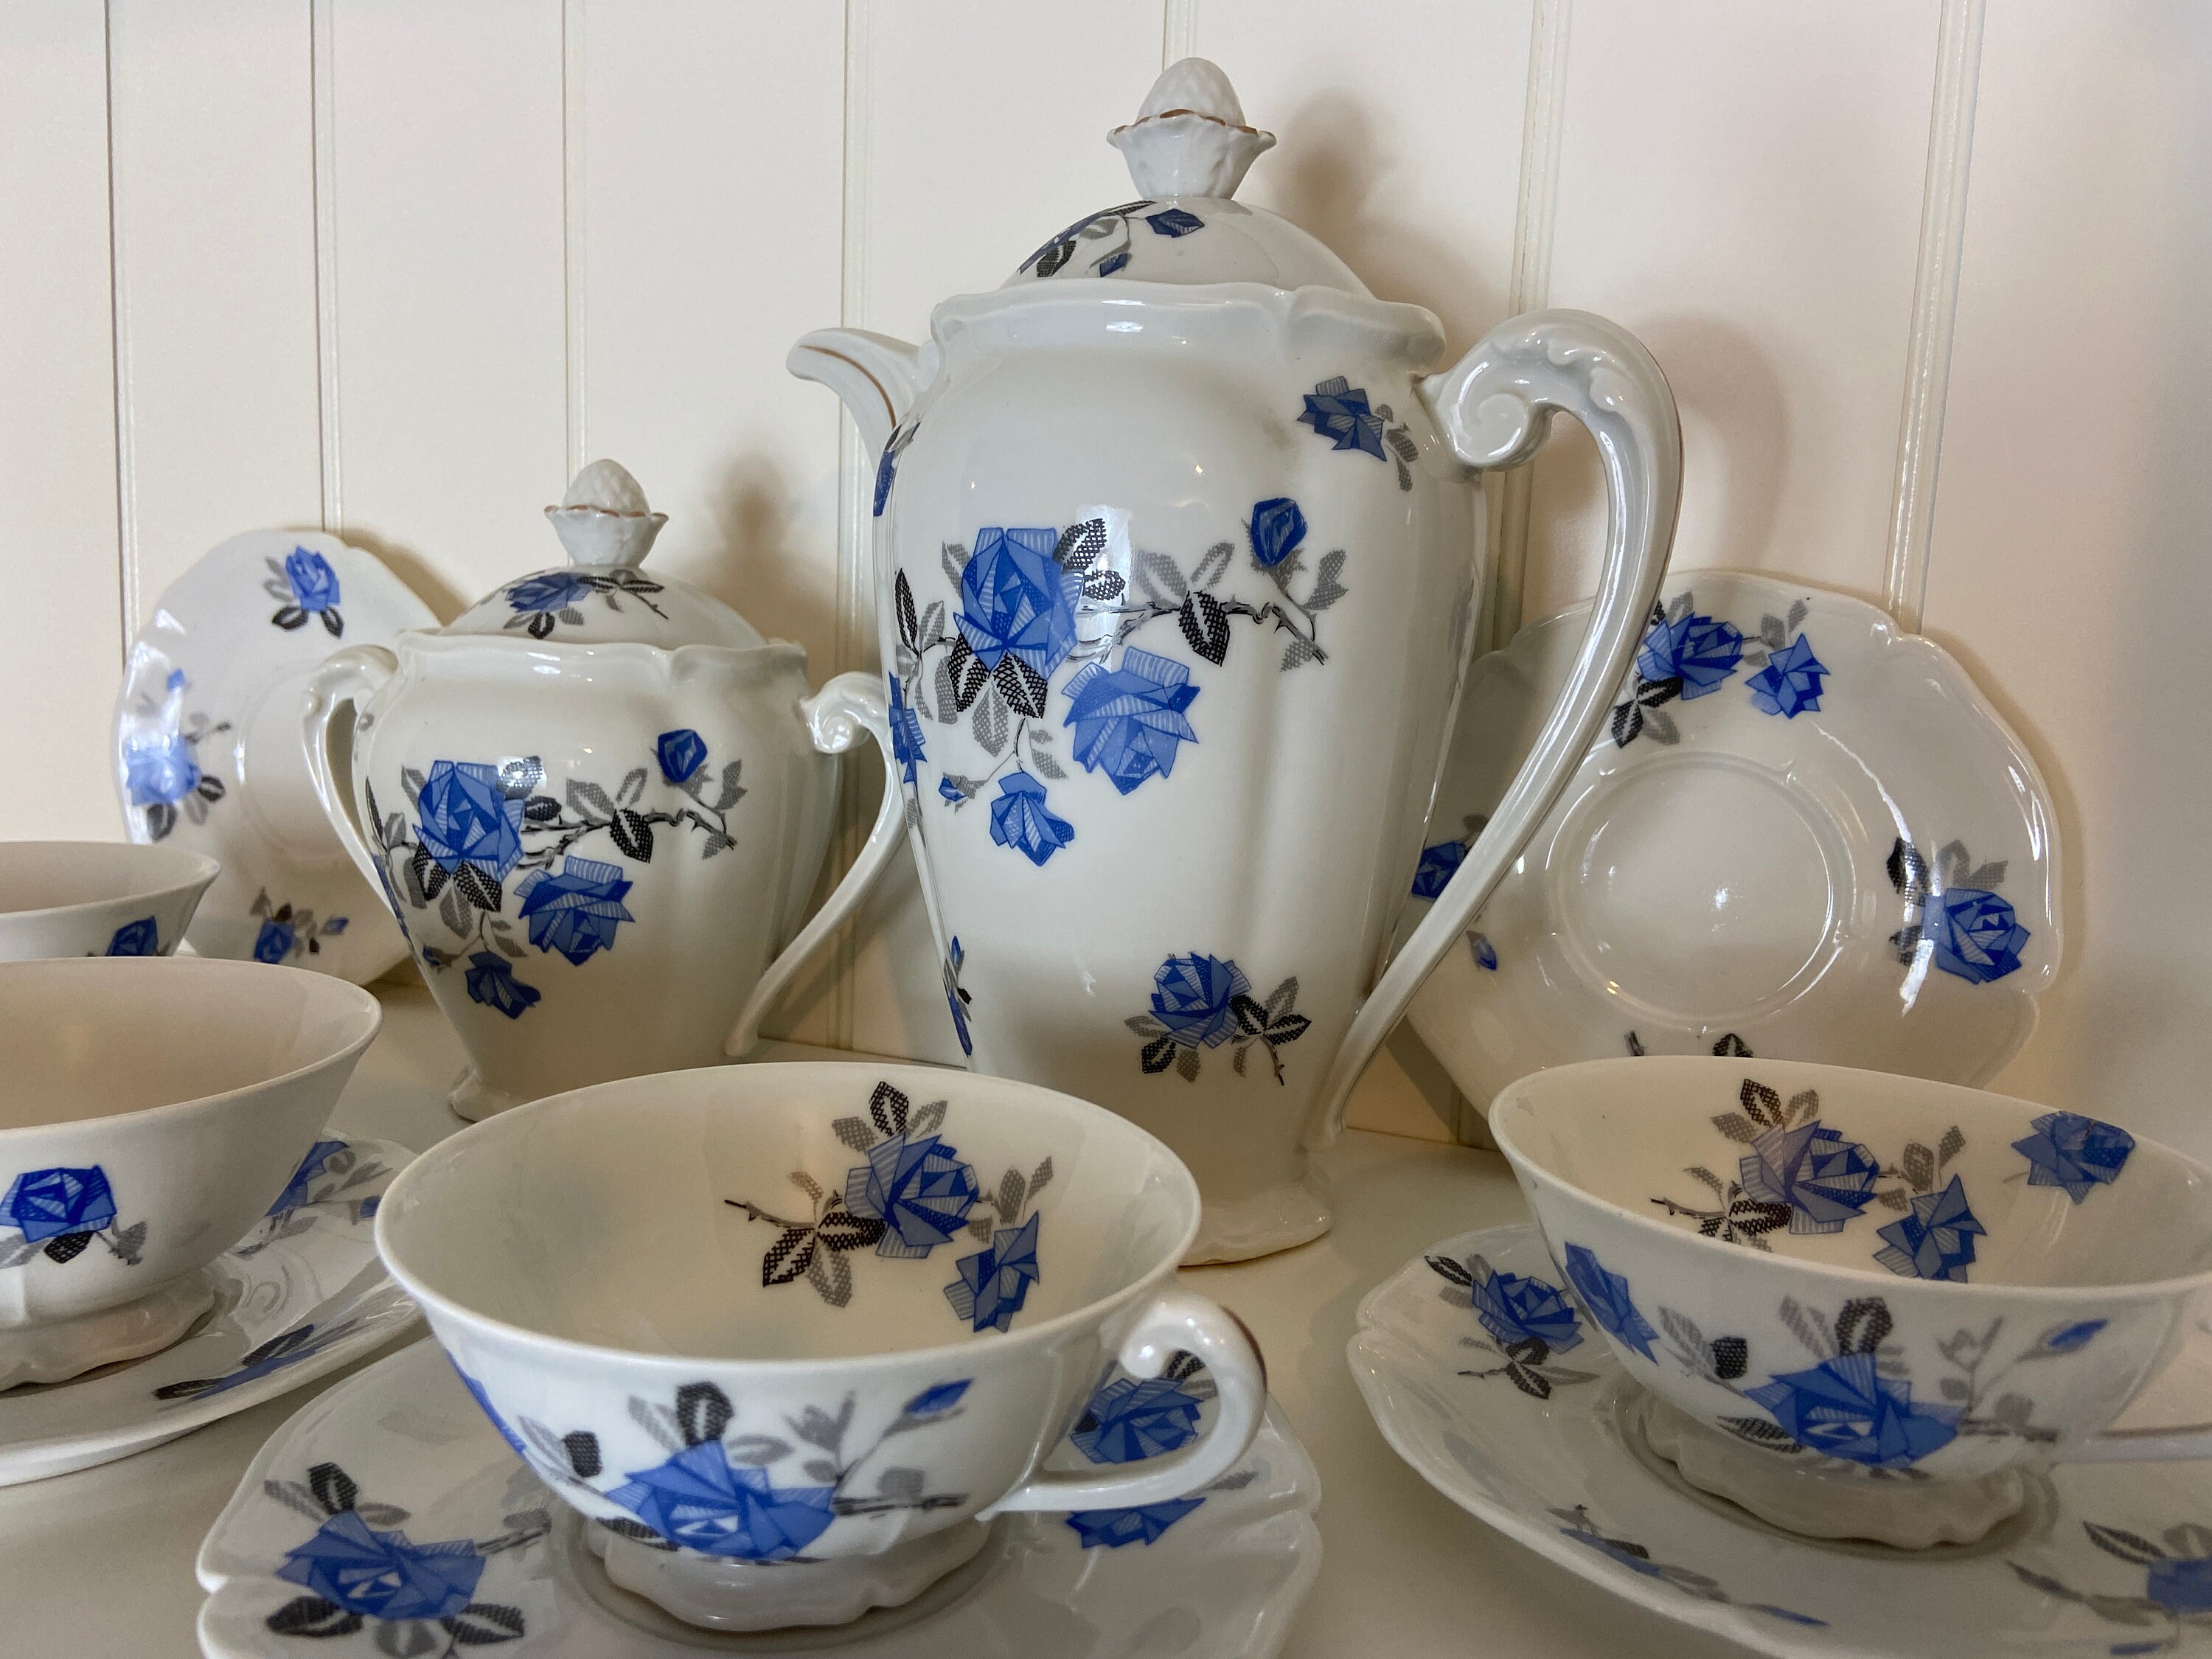 Français Tea Set, Chine, Breakfast Cafetière, Blue & White China, Ancienne Fabrique, Made in France